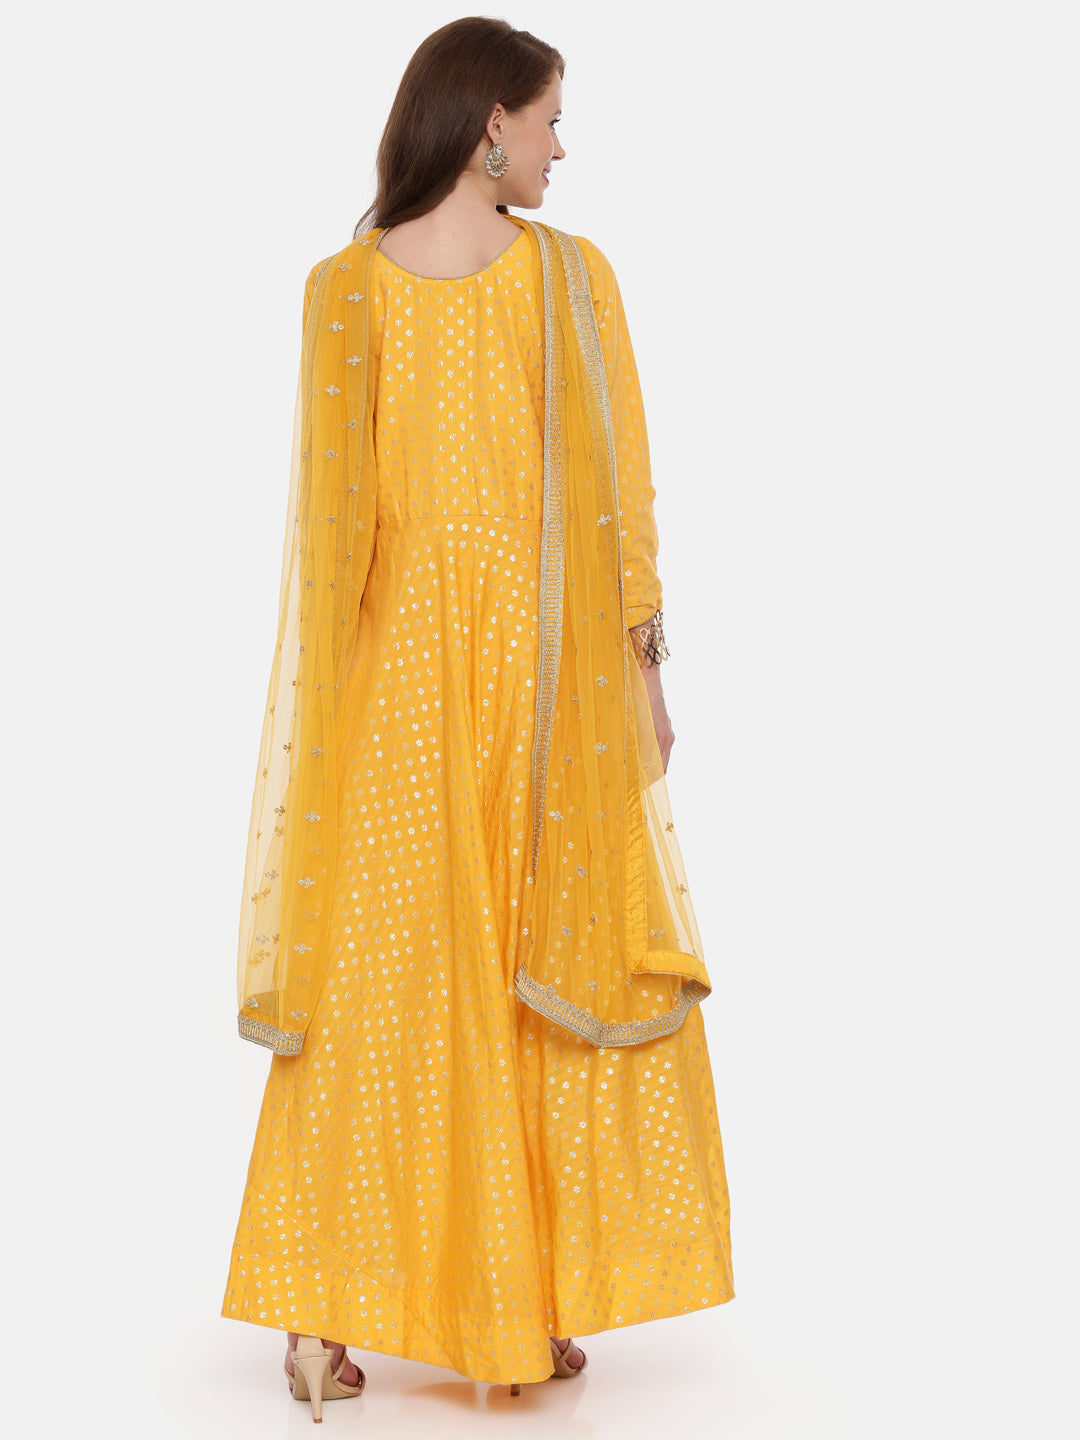 Neeru's Yellow Embellished Anarkali Kurta